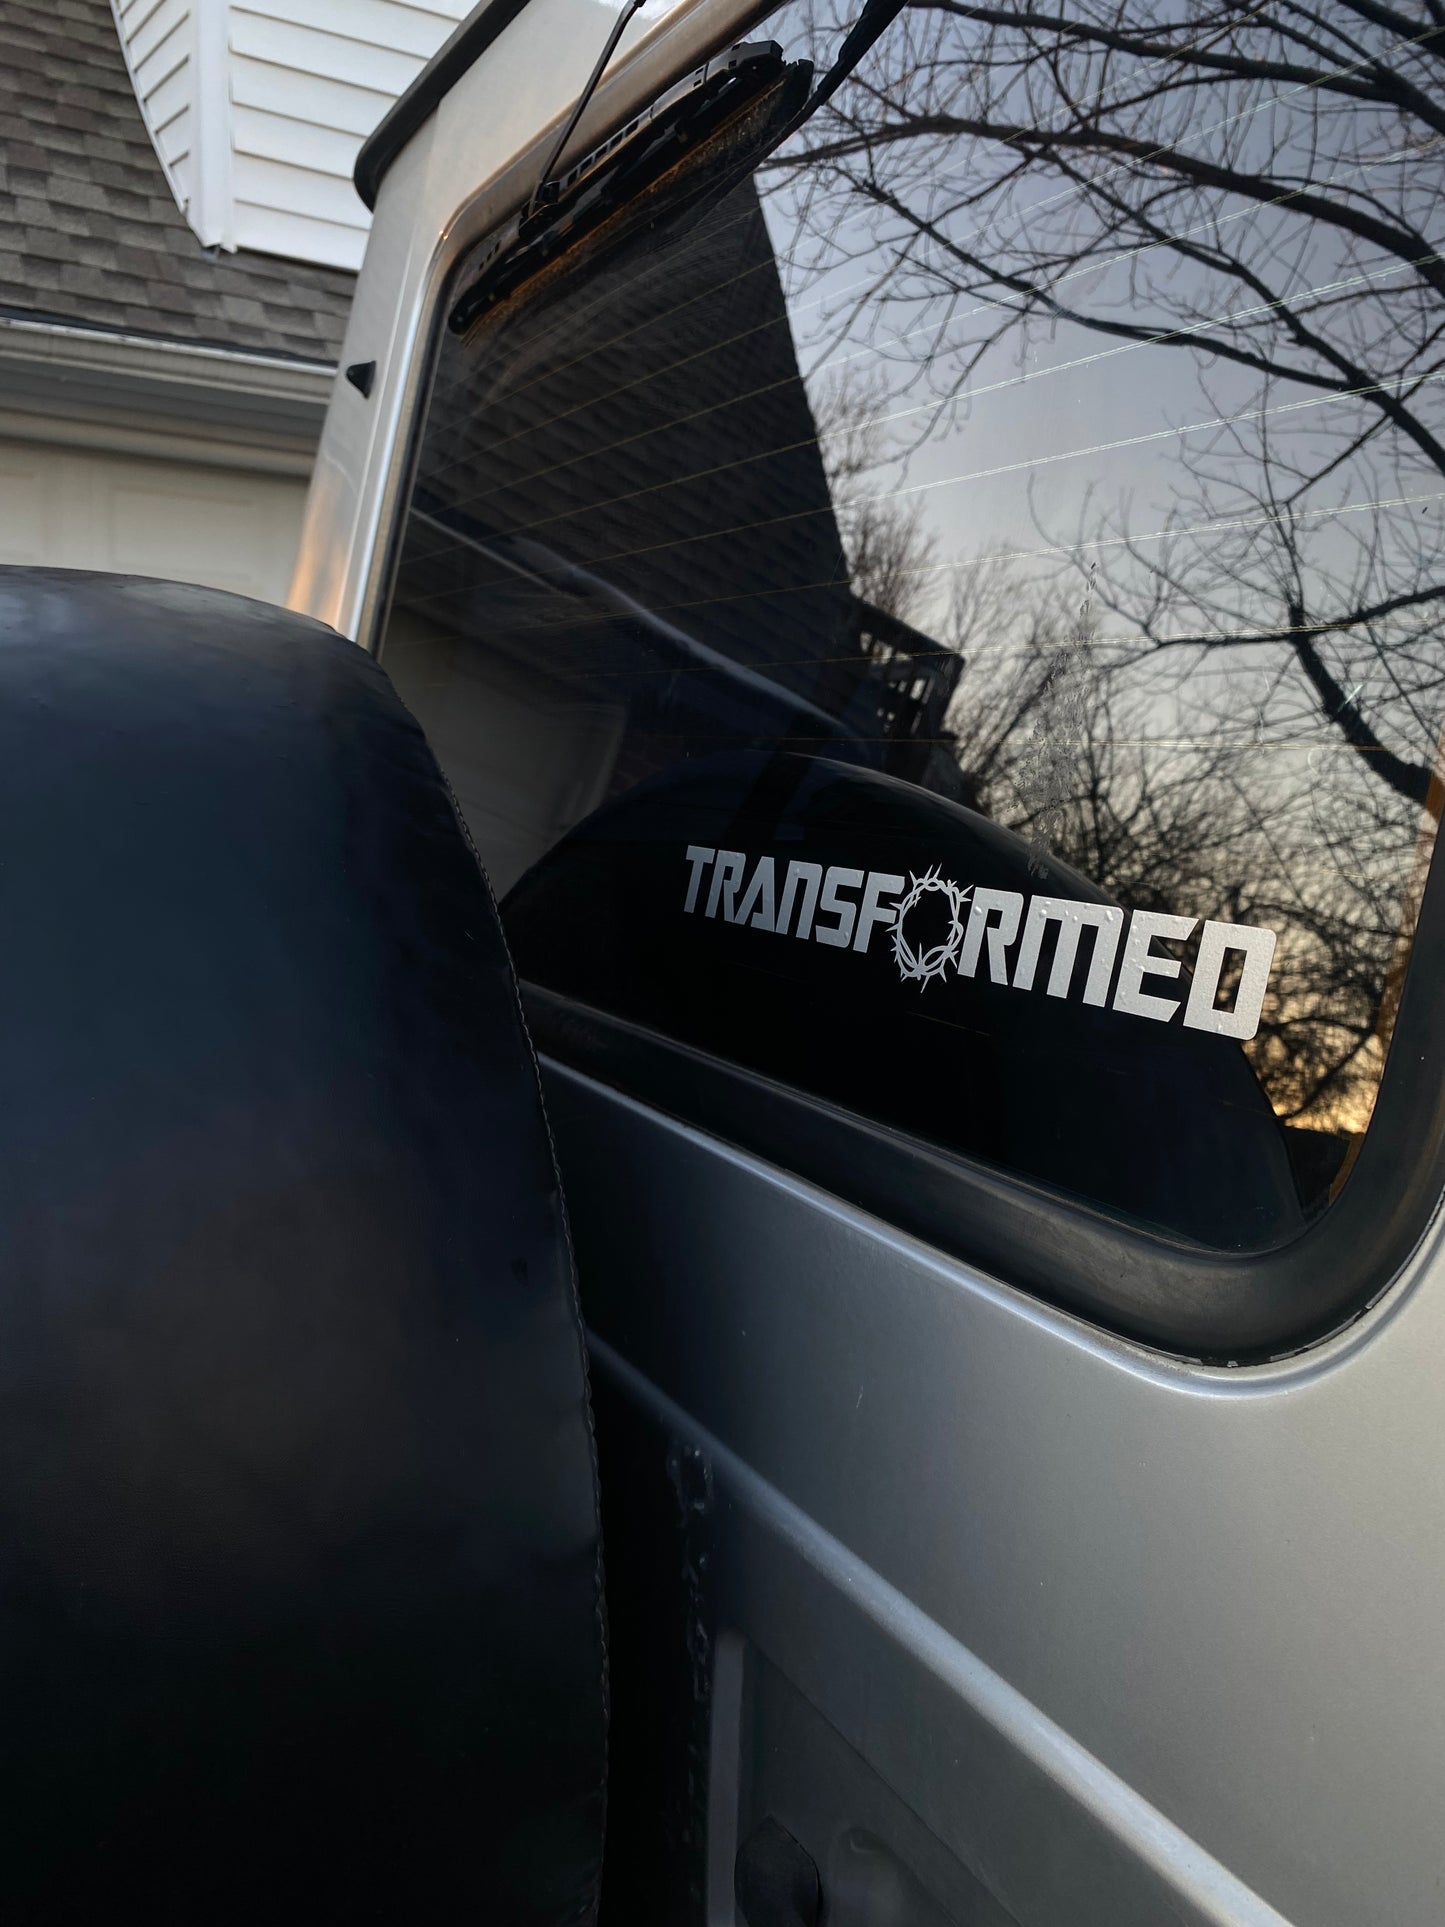 TRANSFORMED car vinyl stickers